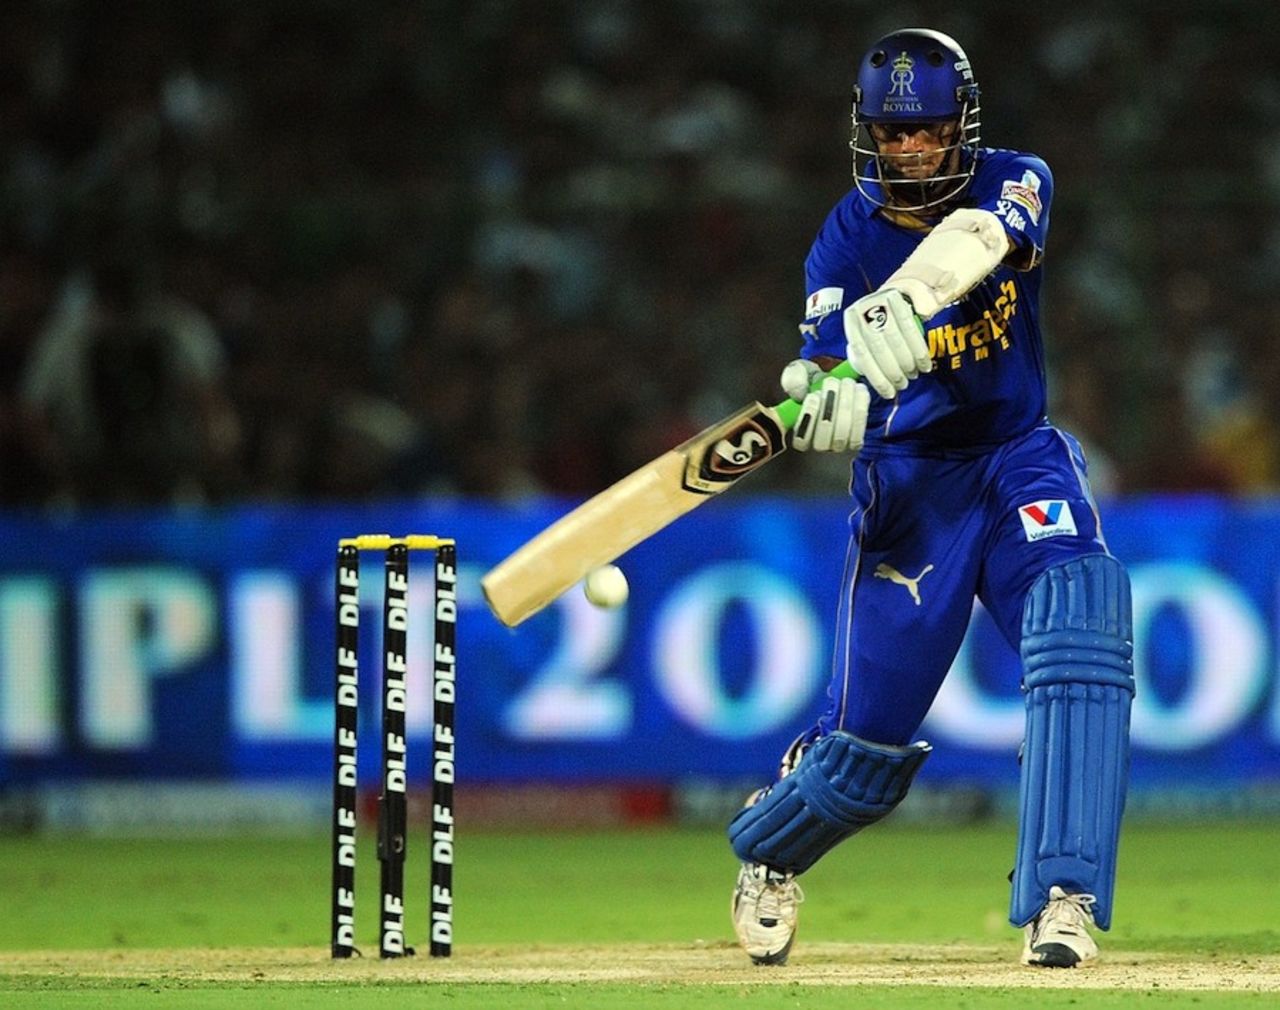 Rahul Dravid scored 58 off 42 balls, Rajasthan Royals v Royal Challengers Bangalore, IPL, Jaipur, April 23, 2012